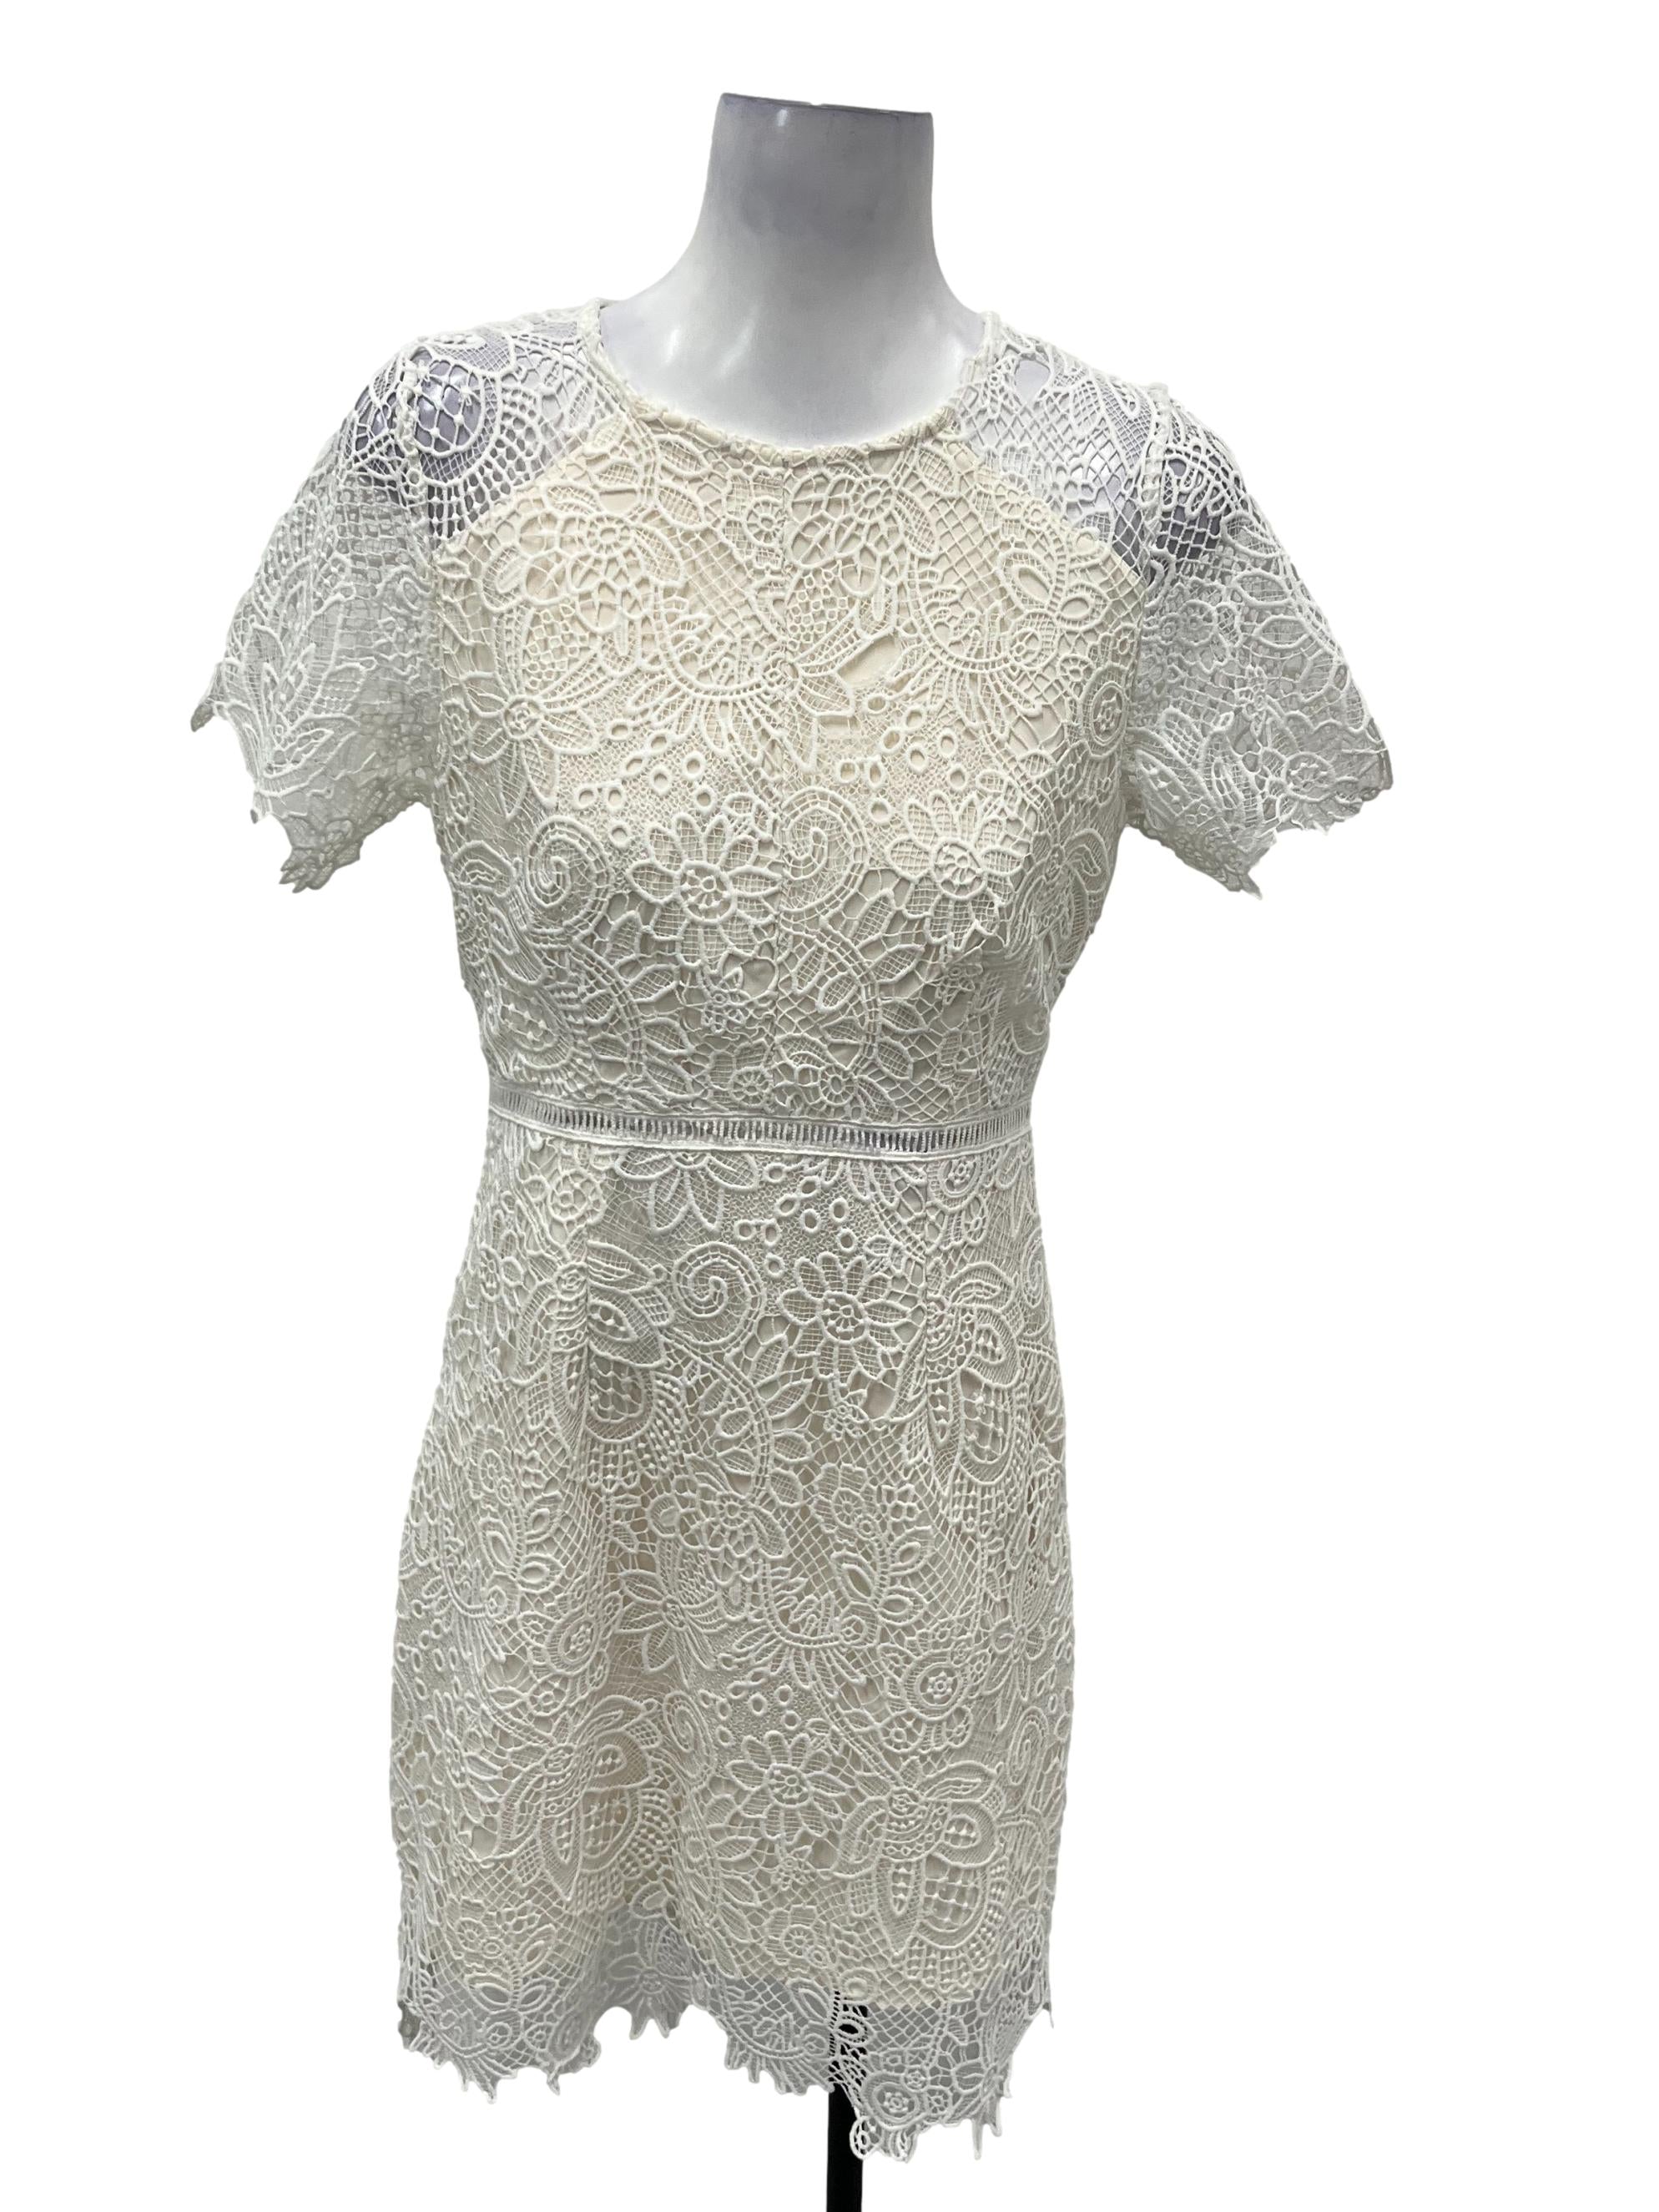 White Lace Floral Dress